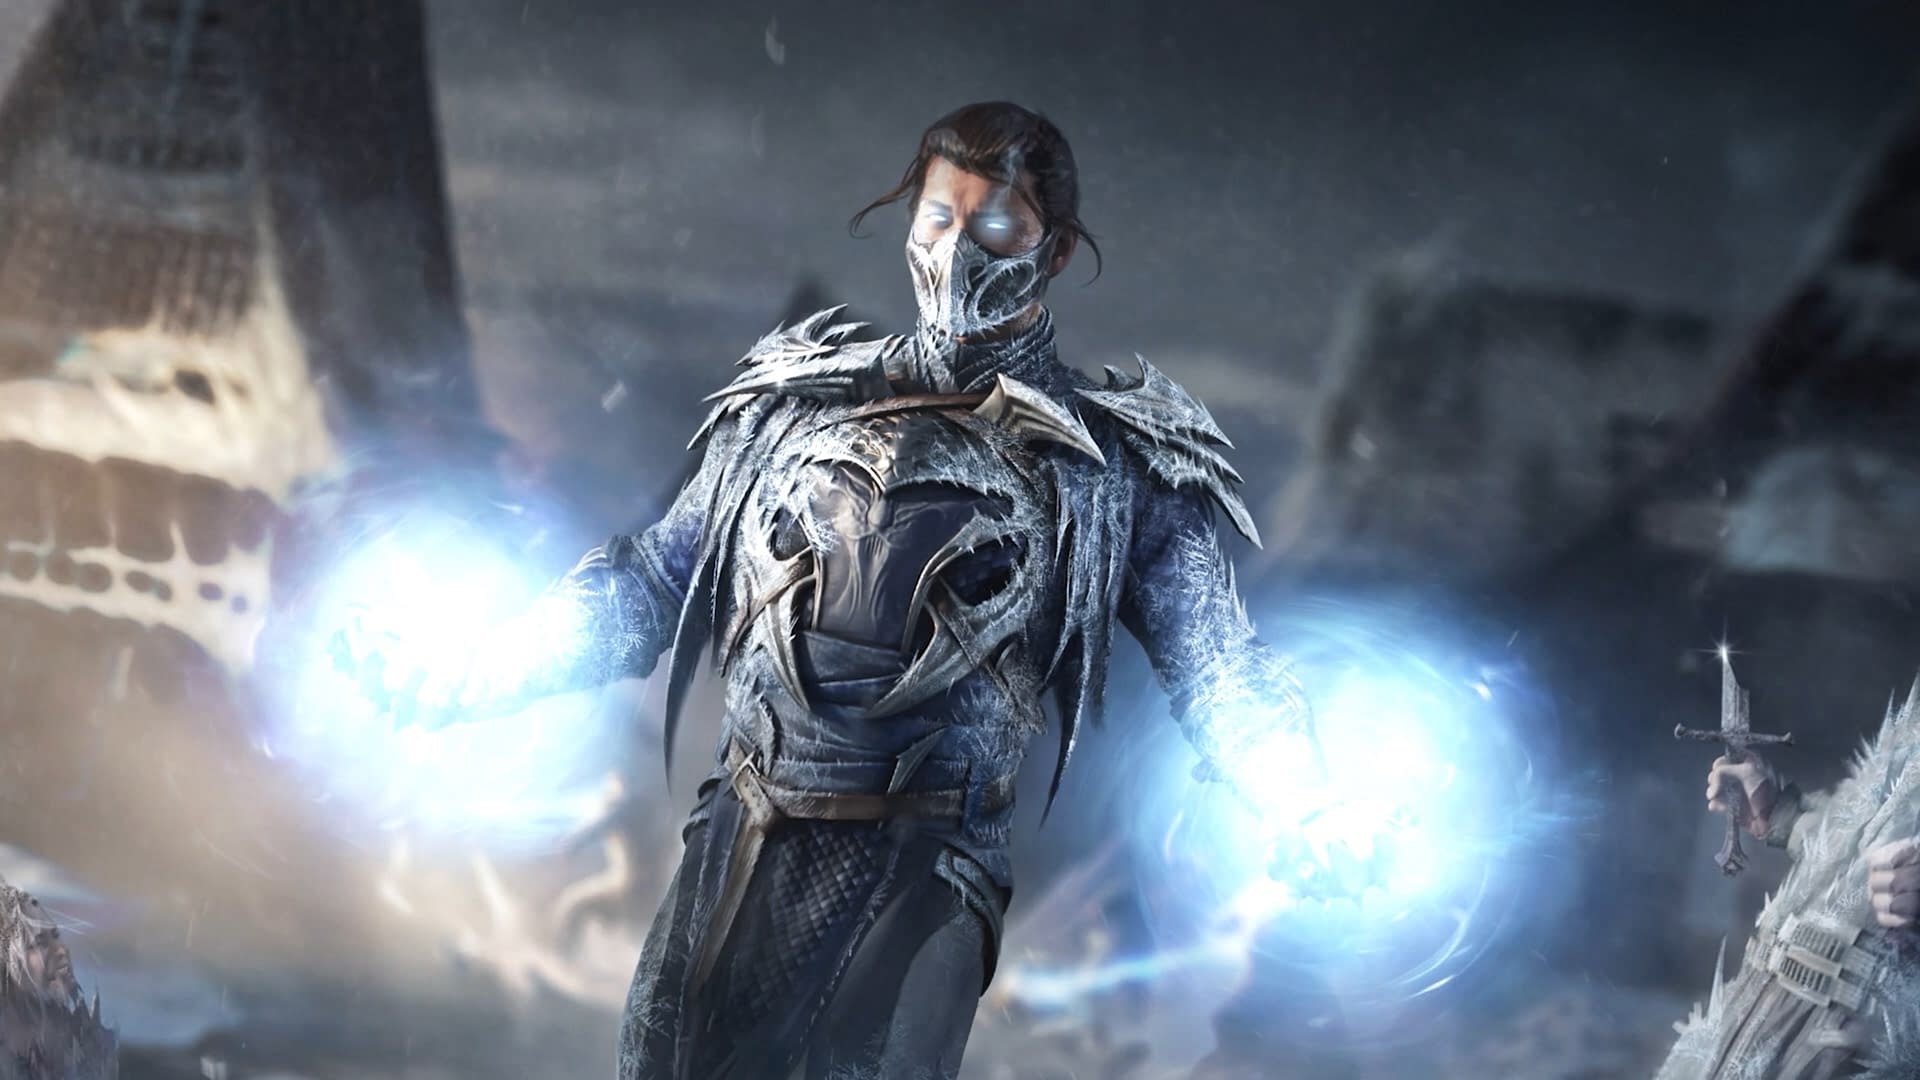 Mortal Kombat 1 Omni-Man Early Access Release Date Confirmed via Xbox Store